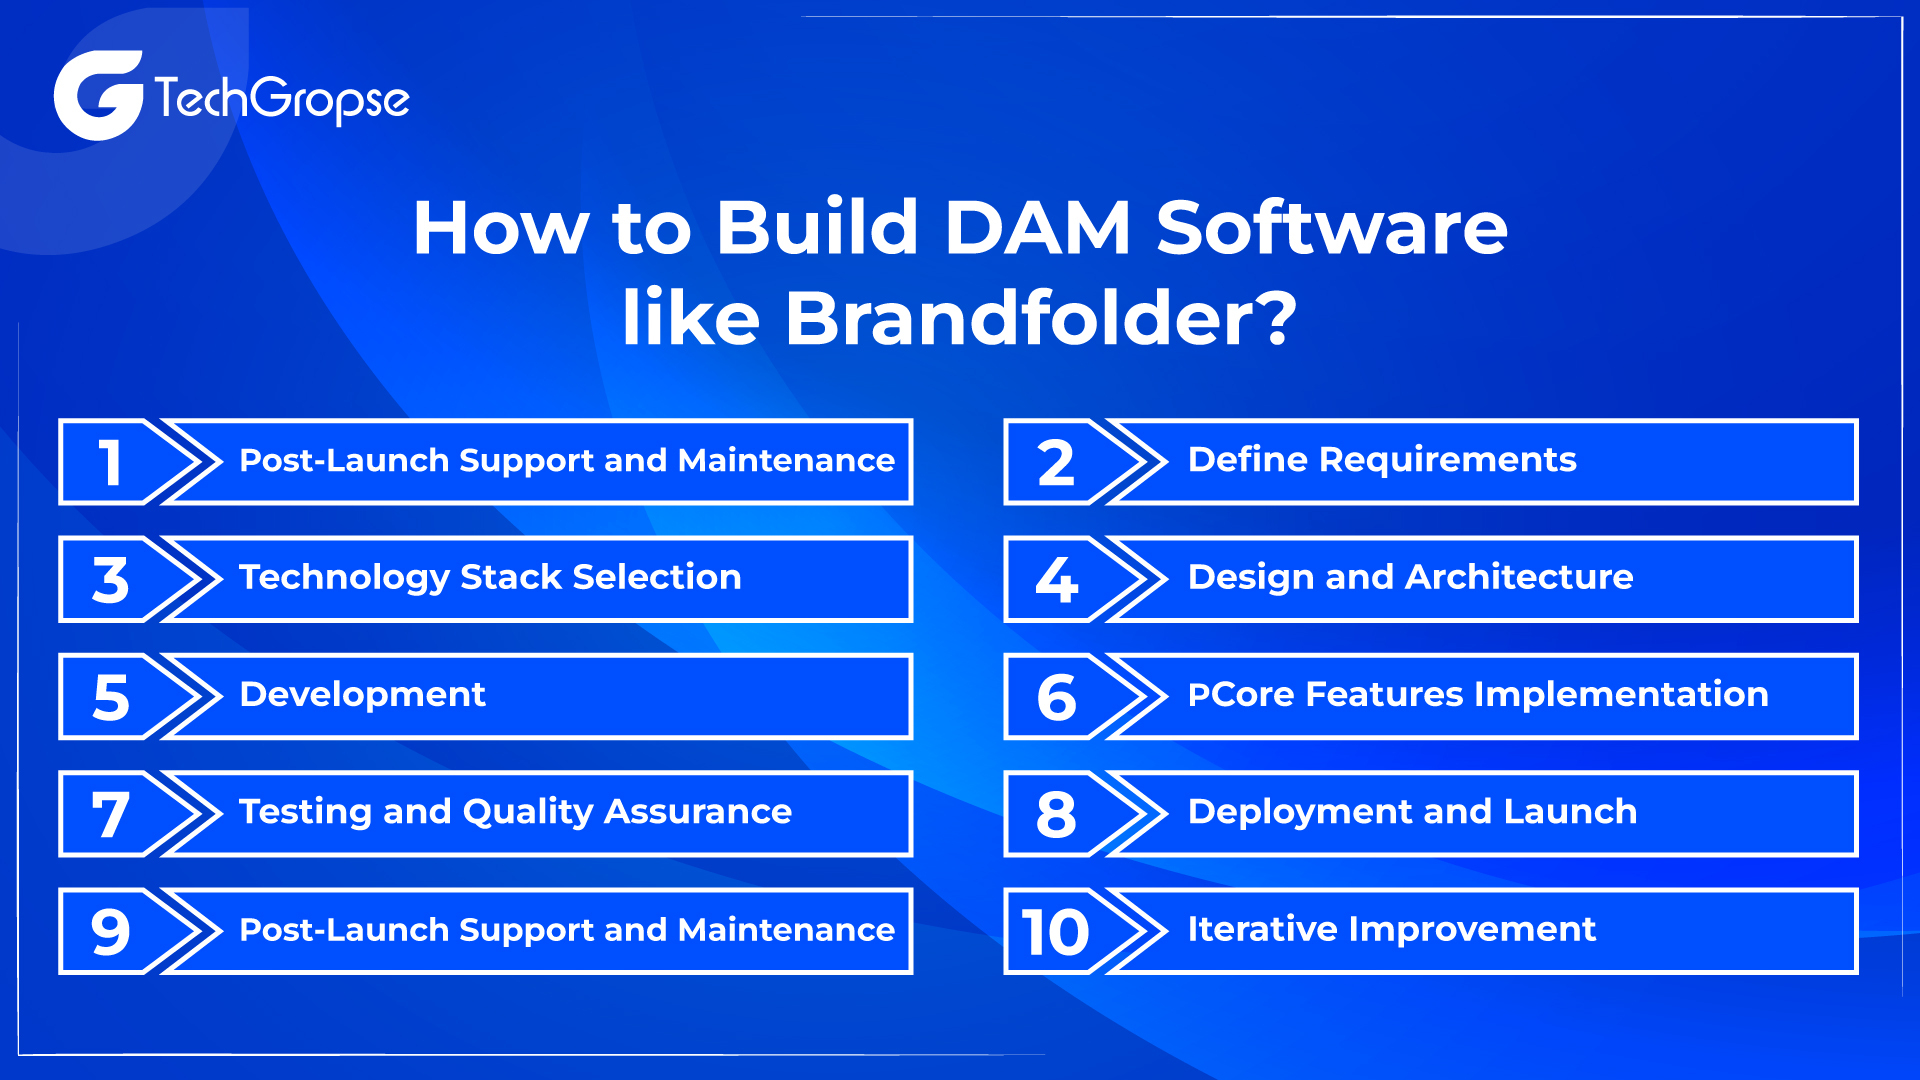 How to Build DAM Software like Brandfolder?